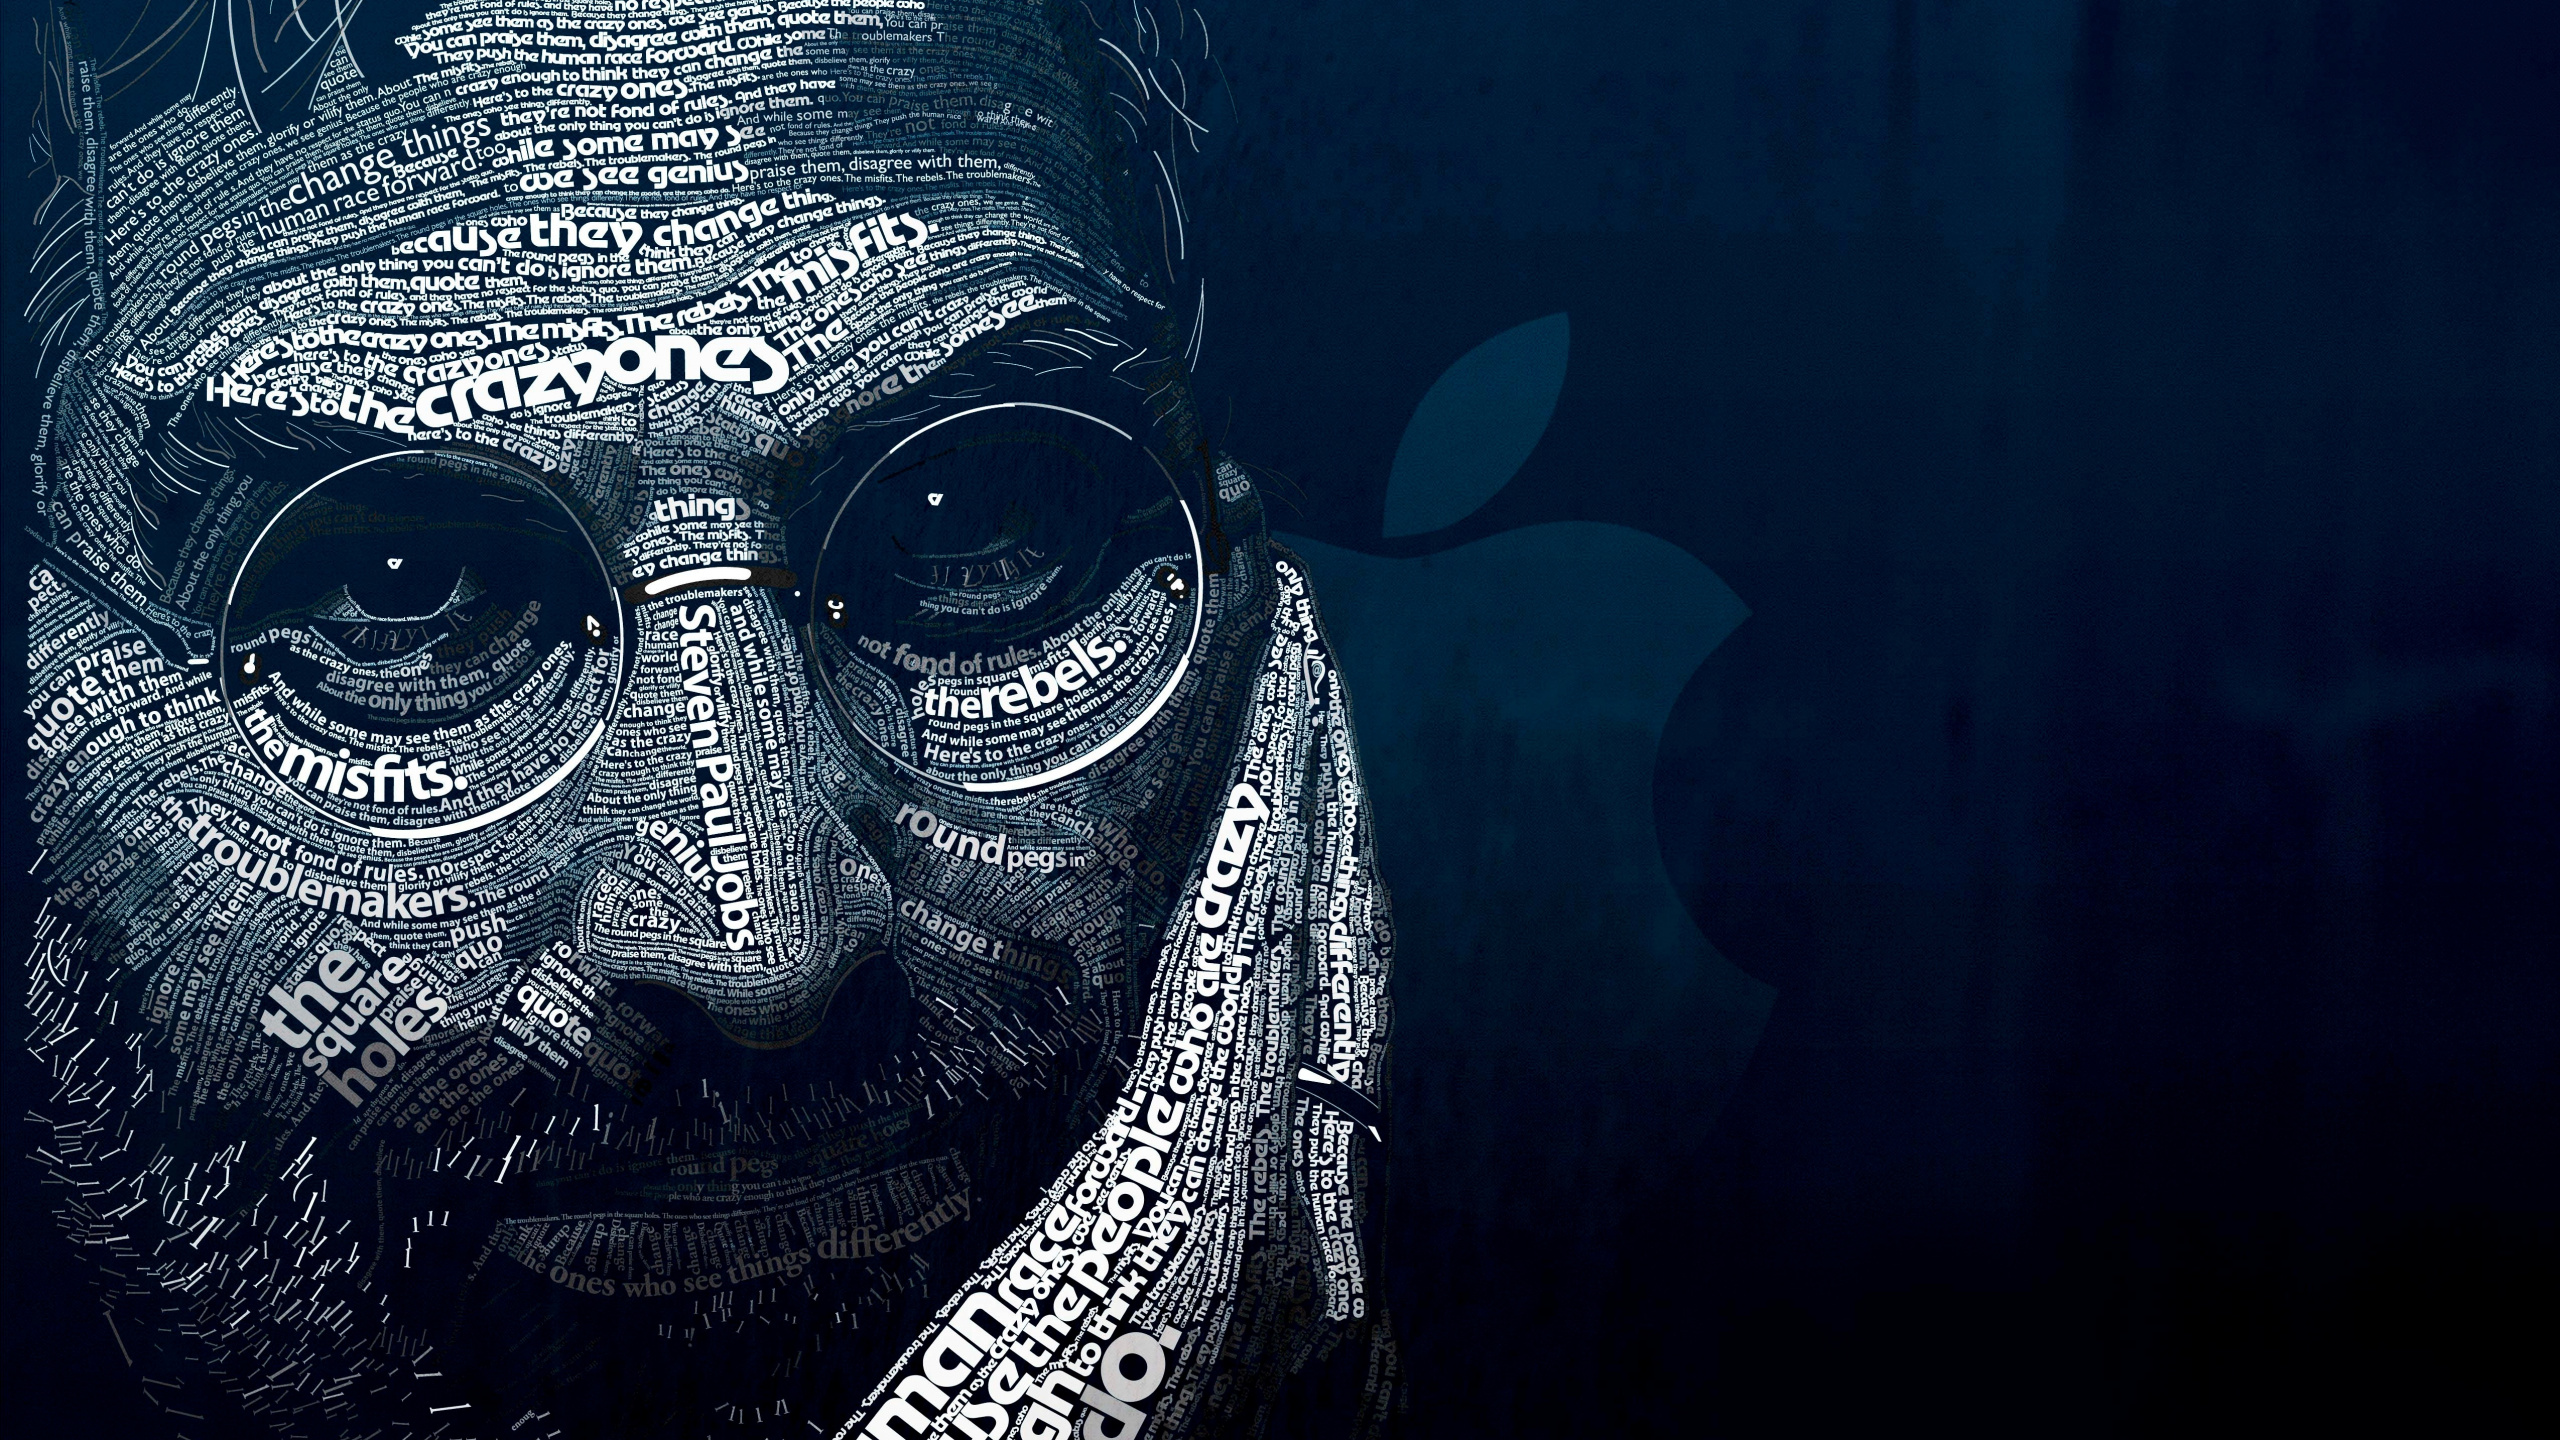 Steve Jobs, Apple, Masque, IPod, Äpfeln. Wallpaper in 2560x1440 Resolution